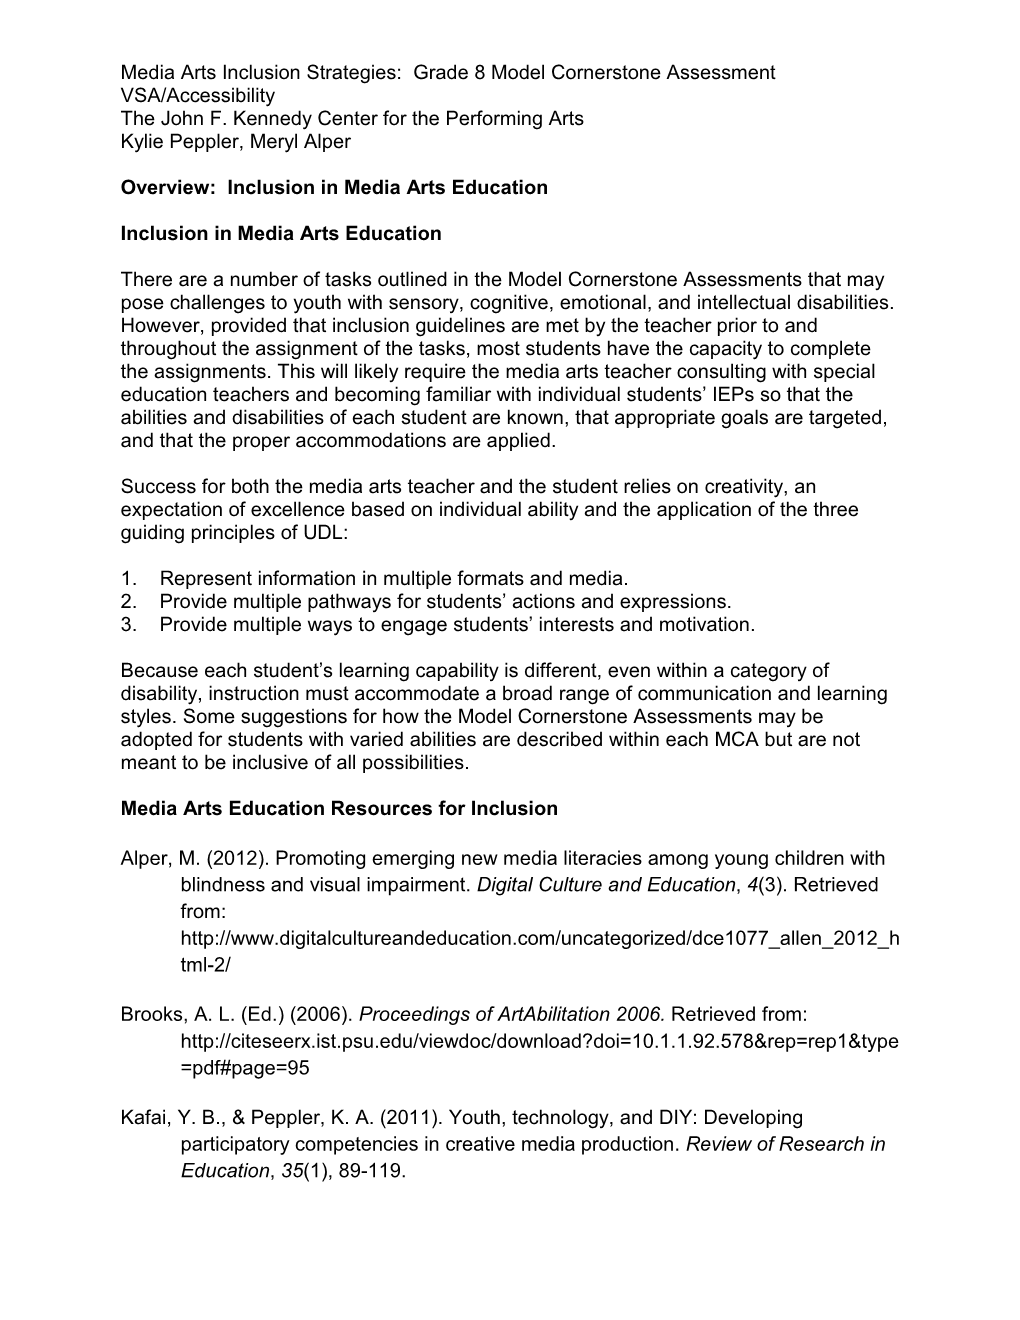 Media Arts Inclusion Strategies: Grade 8 Model Cornerstone Assessment VSA/Accessibility the John F. Kennedy Center for the Performing Arts Kylie Peppler, Meryl Alper